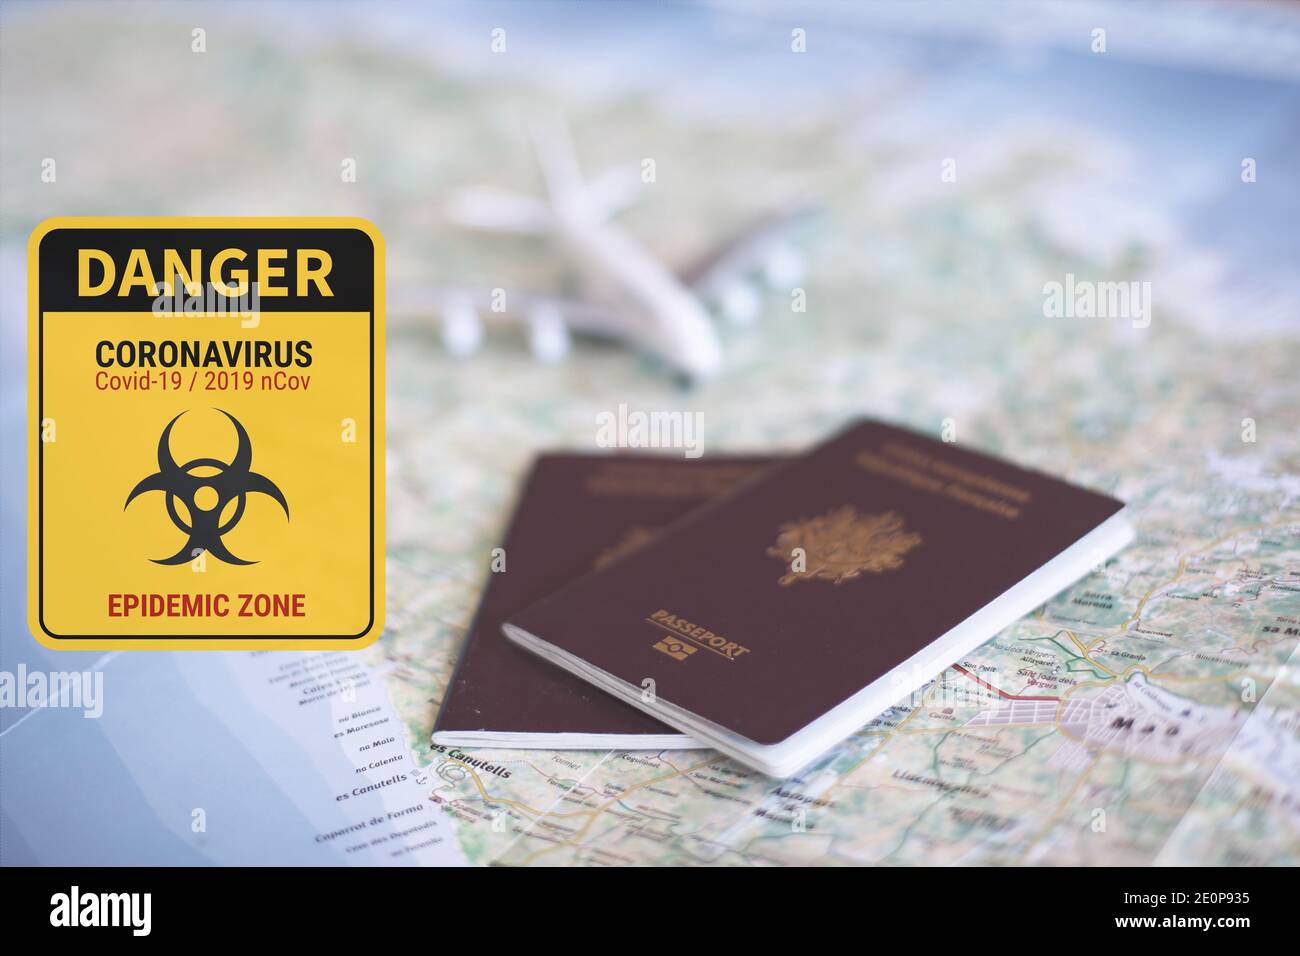 Tourism travel danger with Coronavirus, danger of travel concept risky travel due to coronavirus Stock Photo